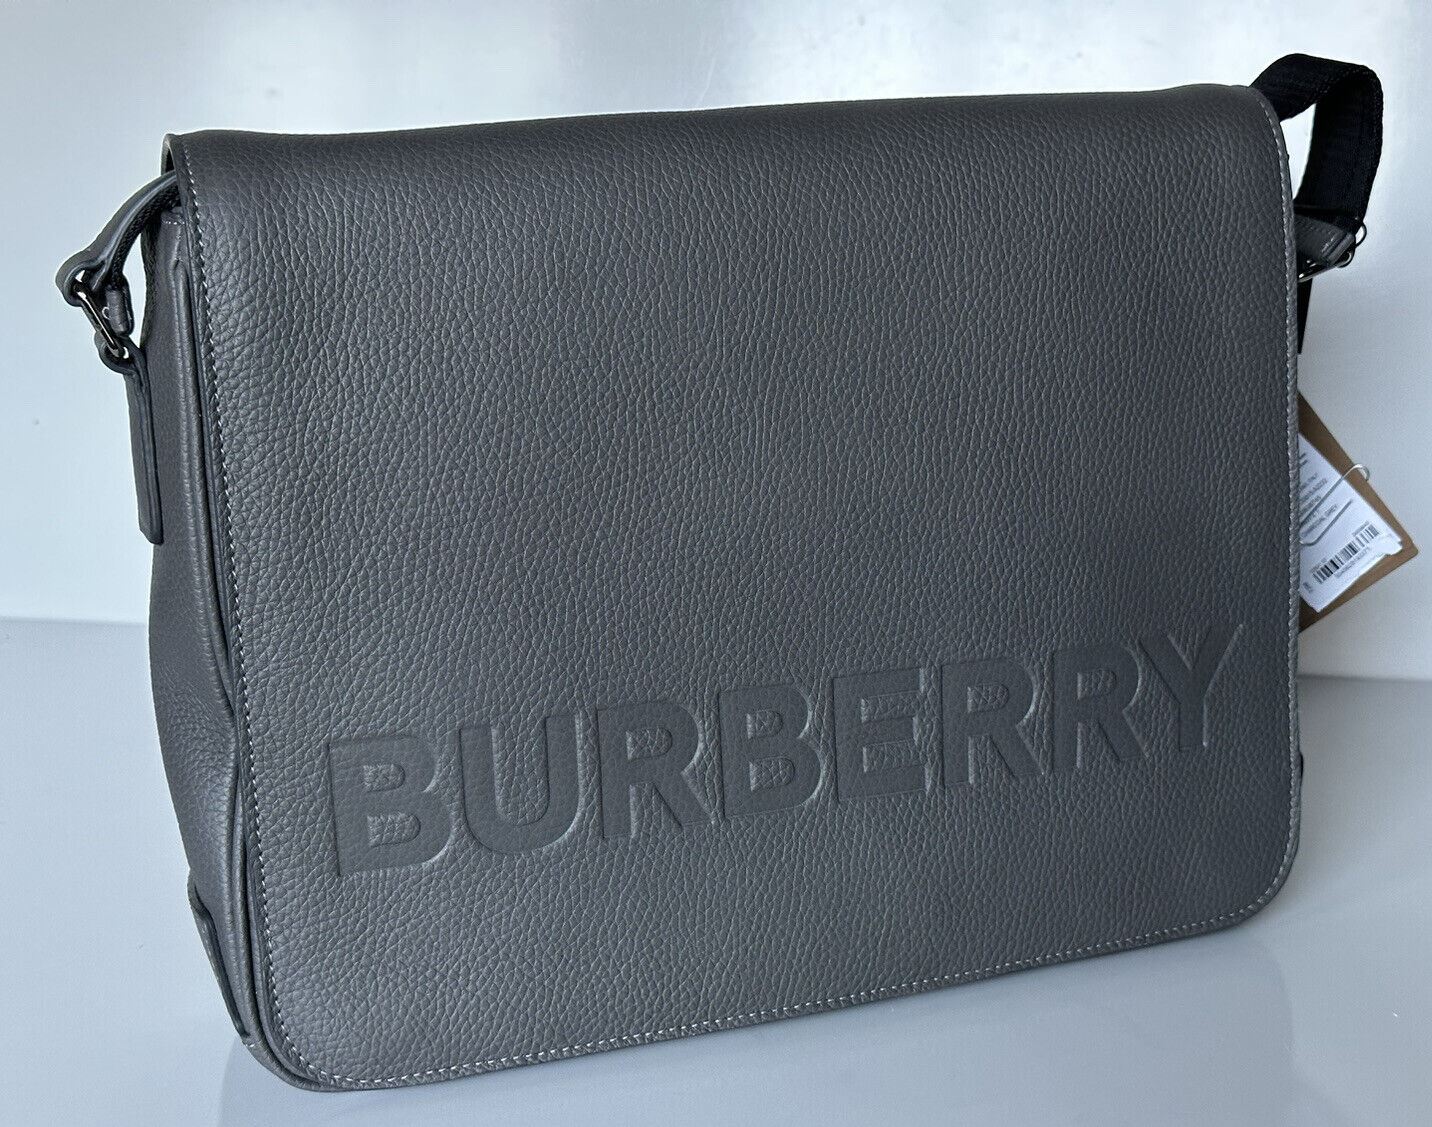 NWT $1350 Burberry Bruno Leather Logo Charcoal Grey Messenger Bag 80528721